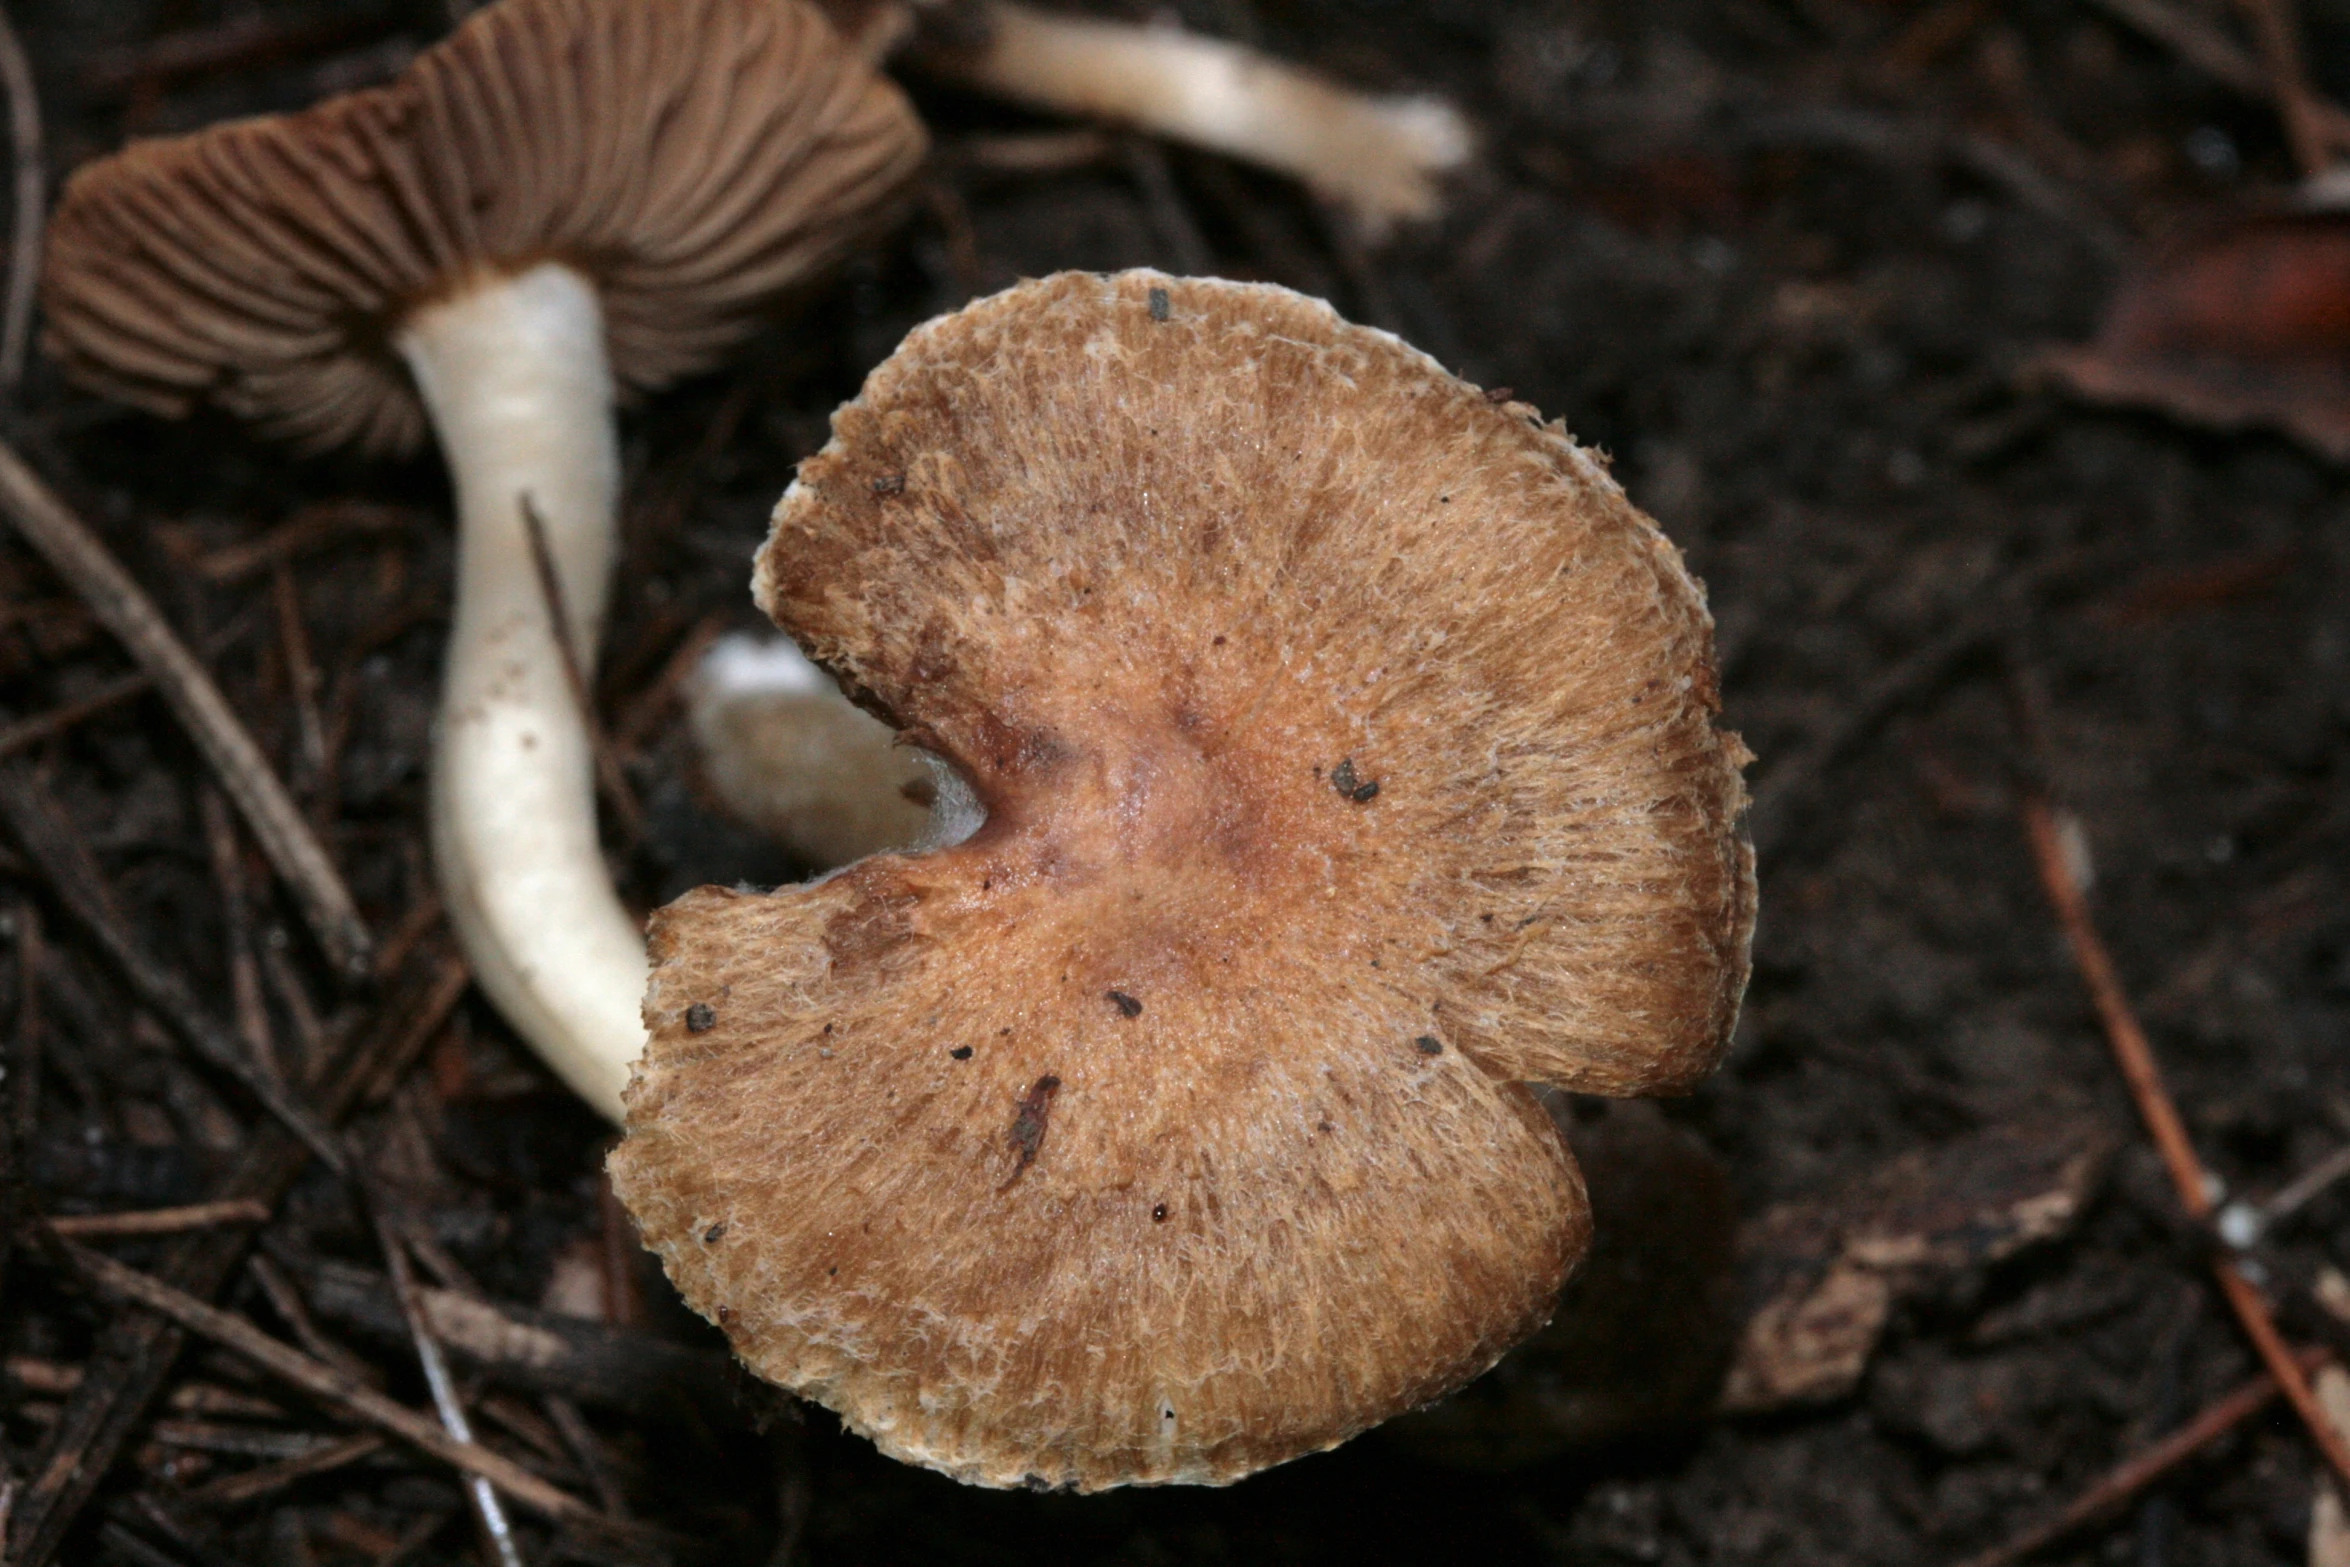 several brown mushrooms growing in the dirt